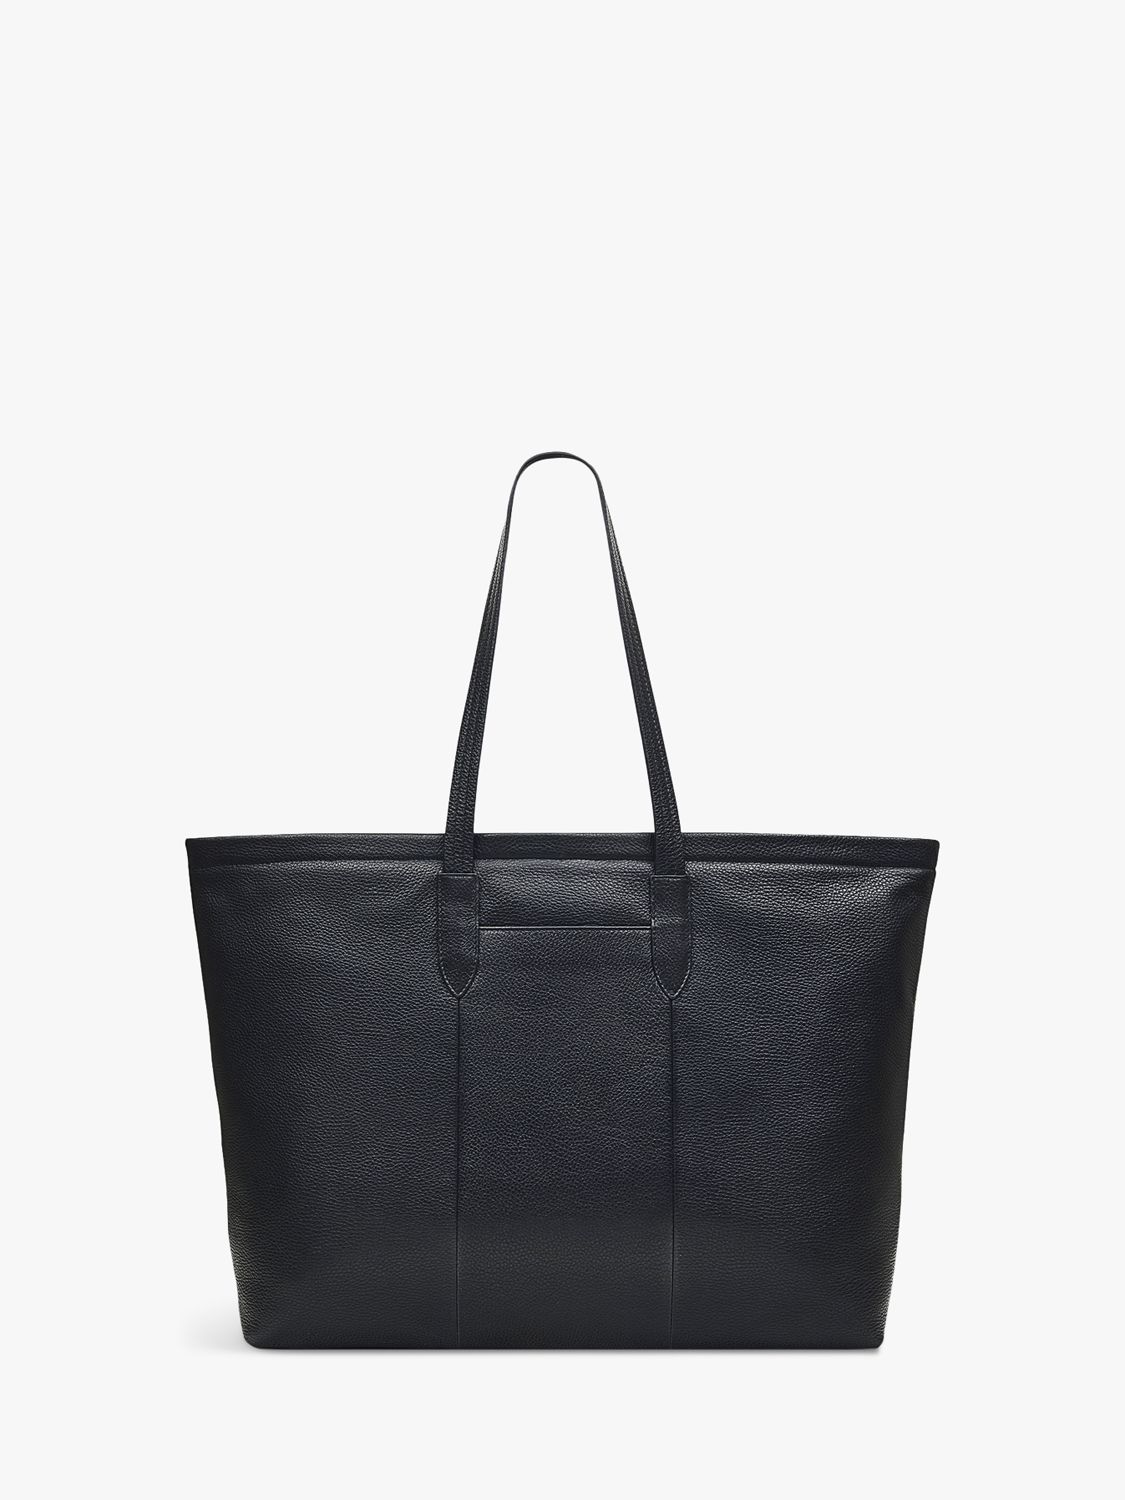 Radley Furze Lane Large Zip Top Tote Bag, Black at John Lewis & Partners